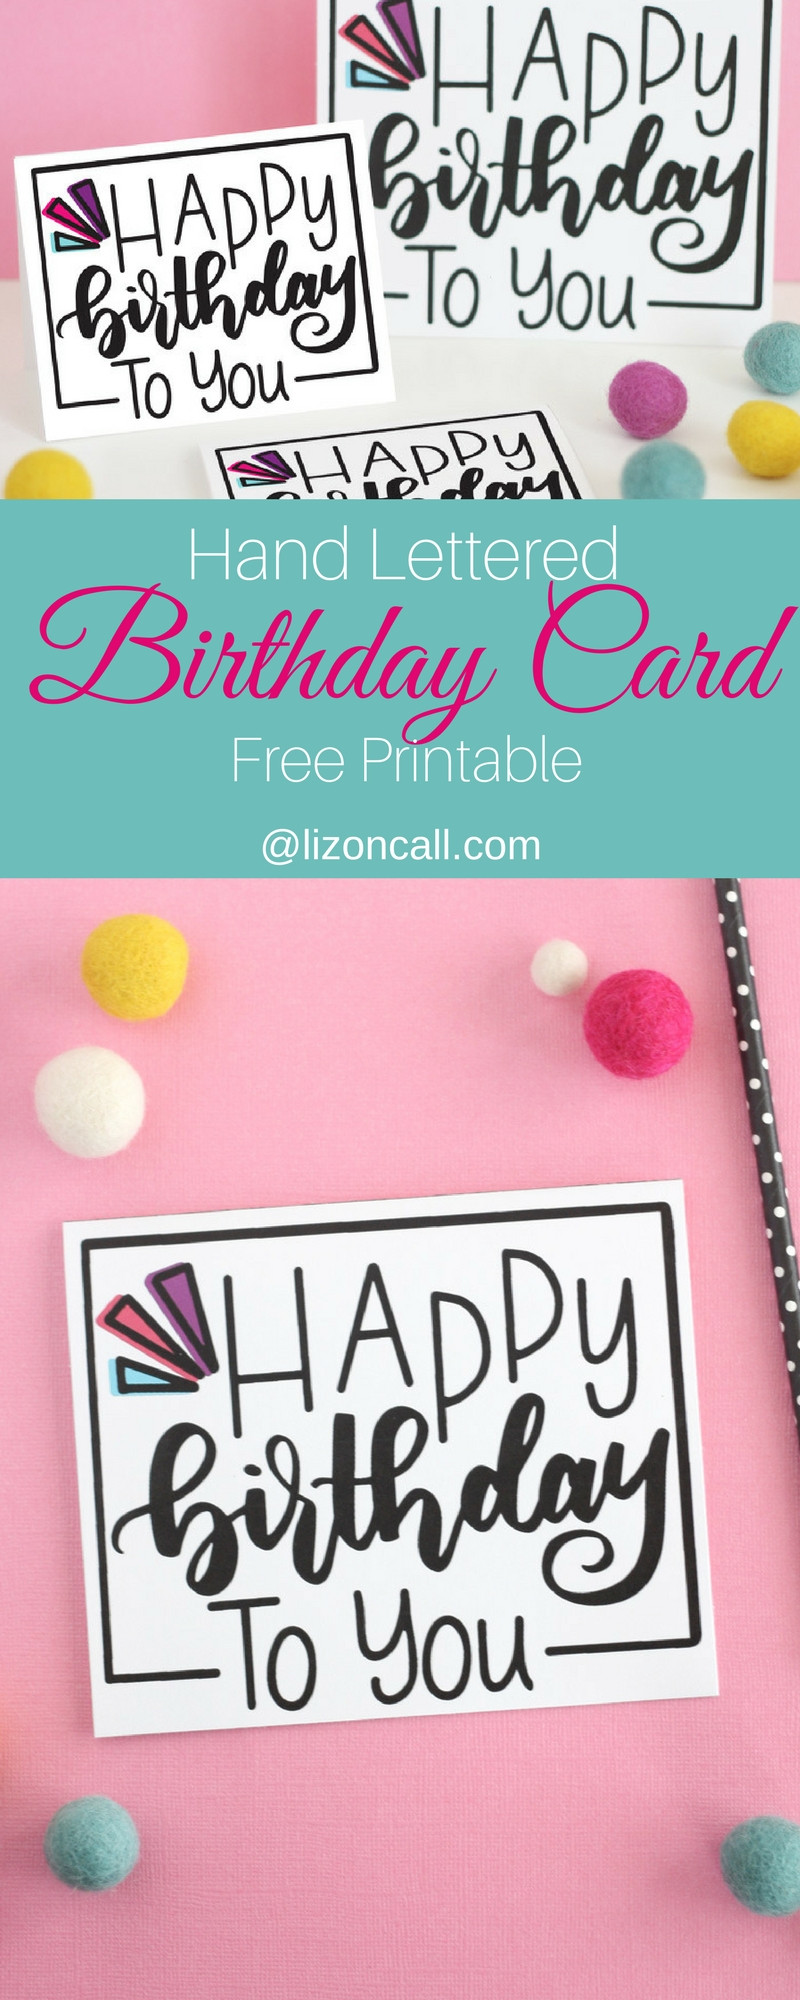 Birthday Card Free
 Hand Lettered Free Printable Birthday Card Liz on Call